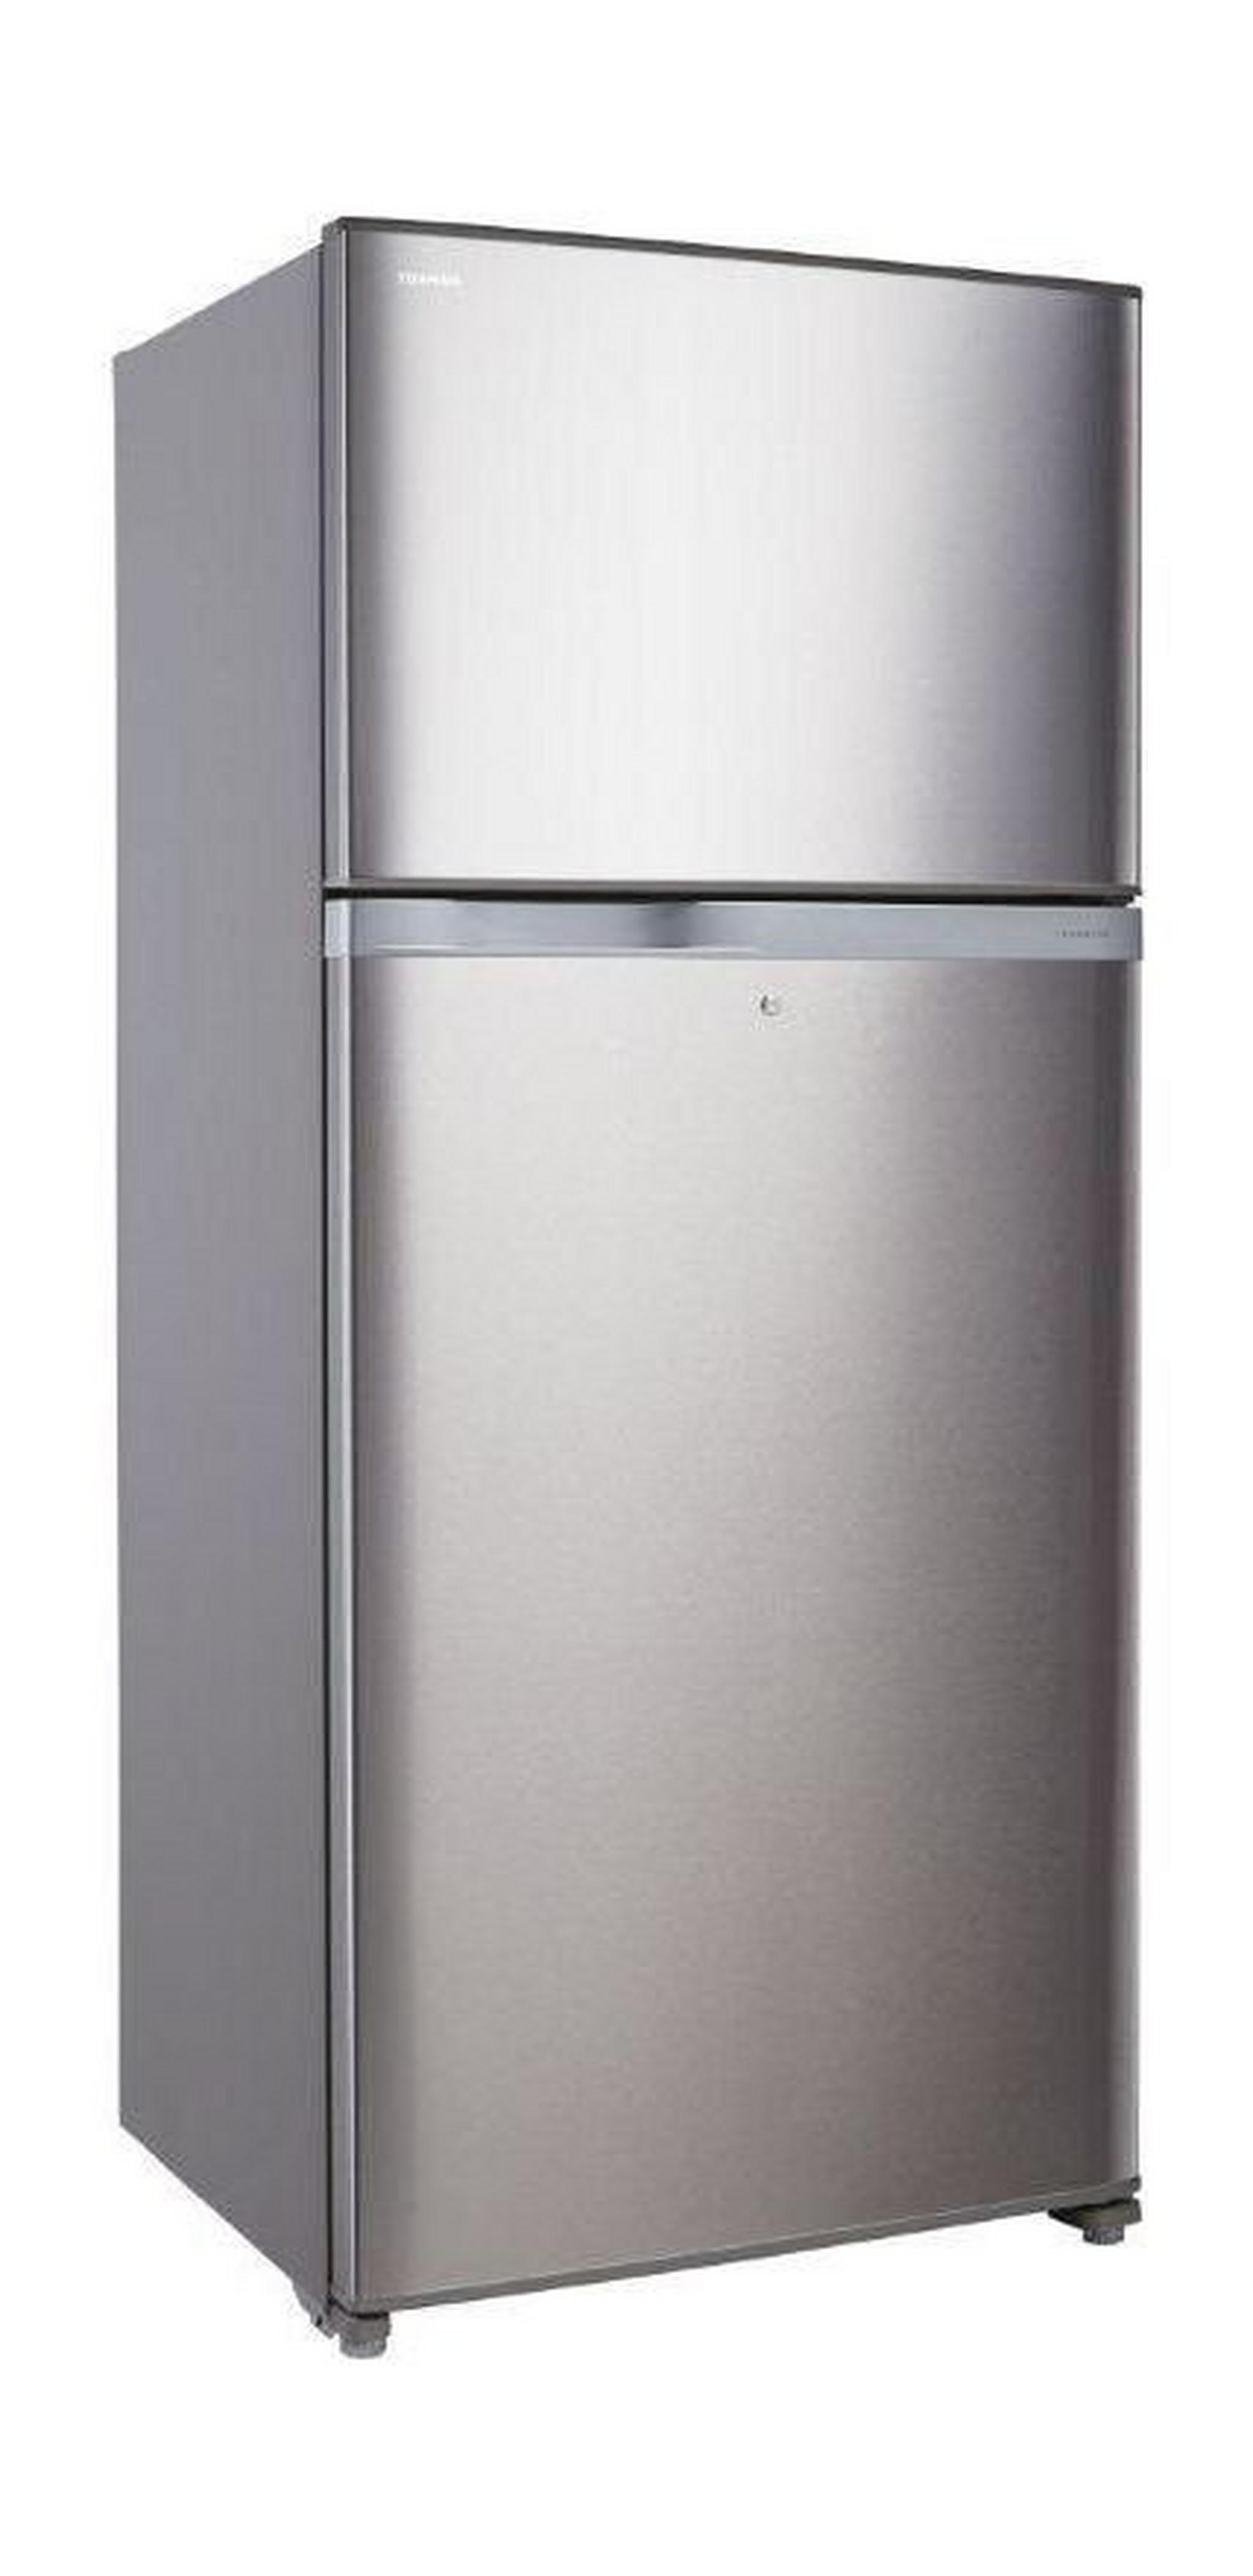 Toshiba 25 Cubic Feet Top Mount Refrigerator GR-A820U(BS)